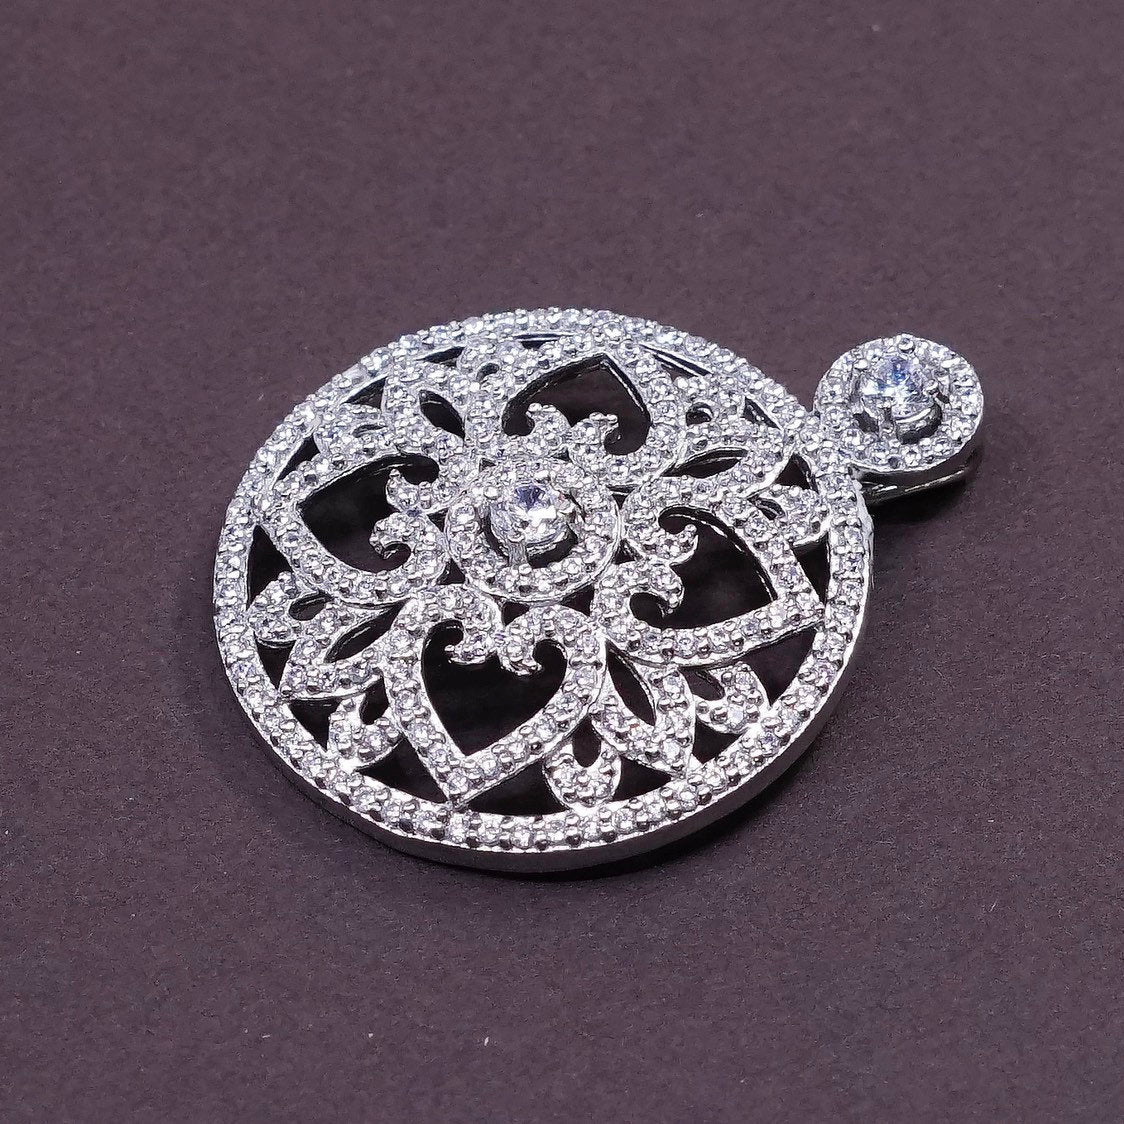 VTG Sterling silver pendant, 925 round pendant w/ cluster crystal